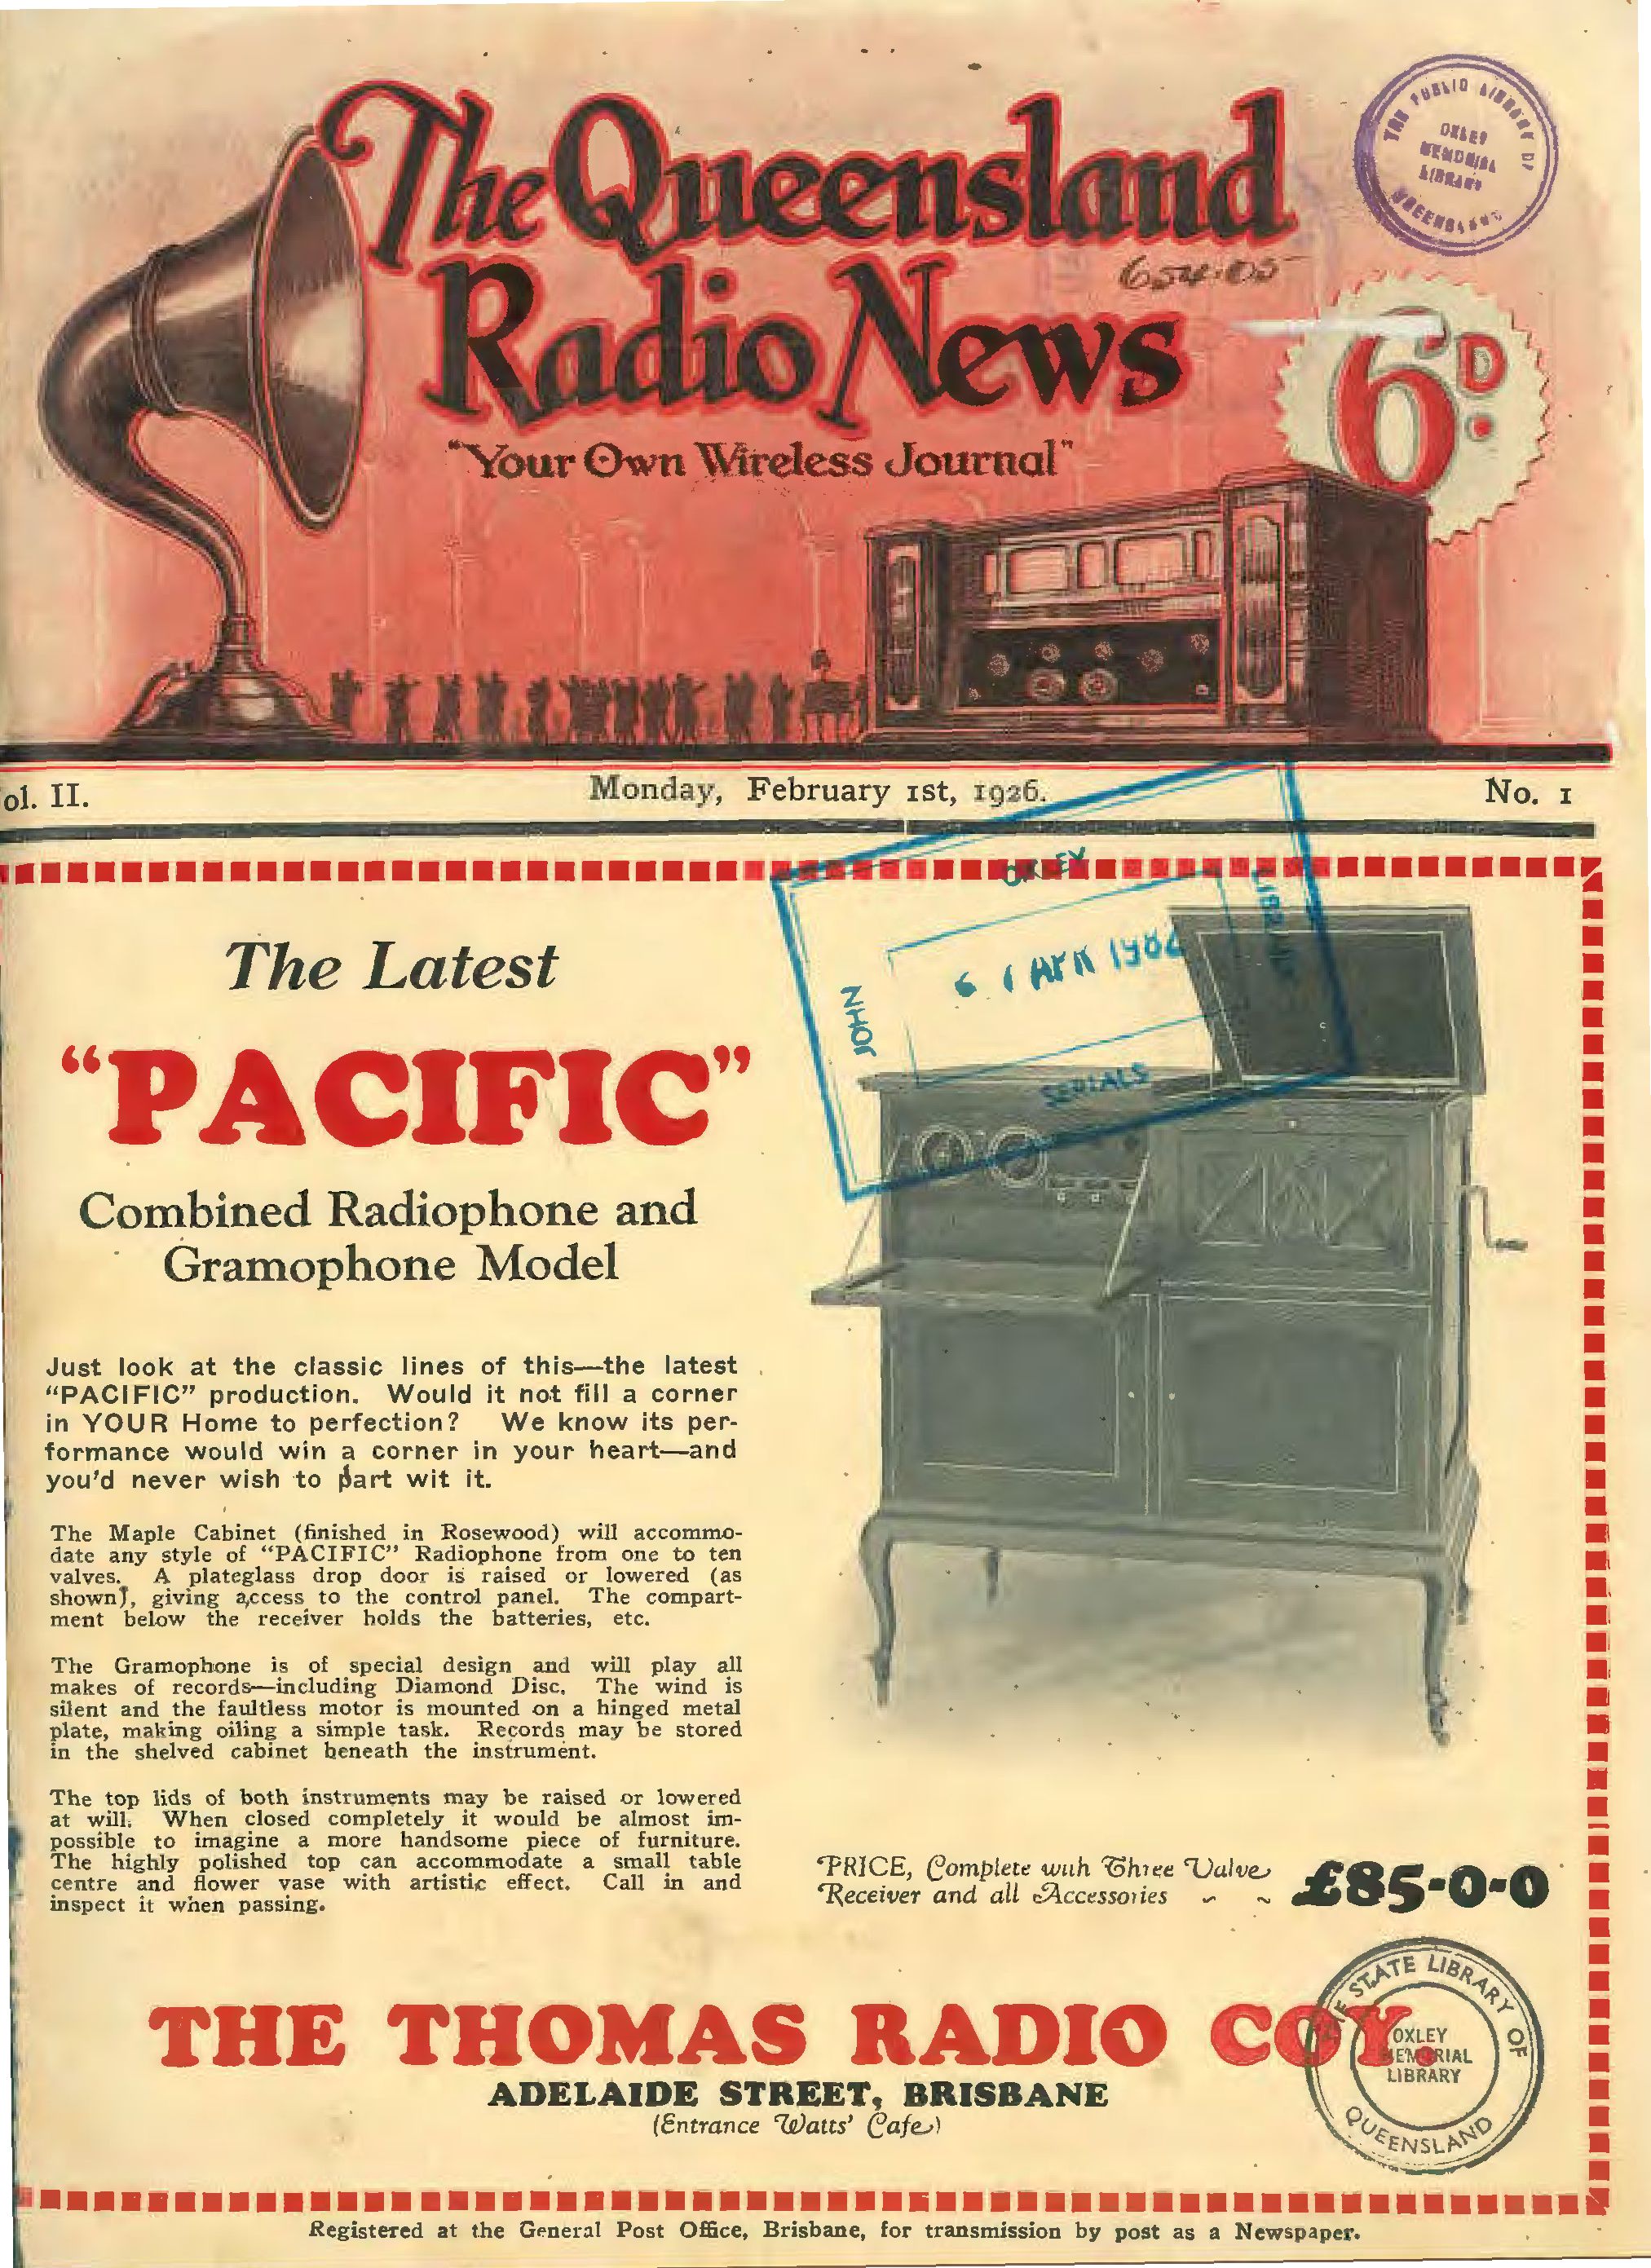 The Queensland Radio News Feb 1926